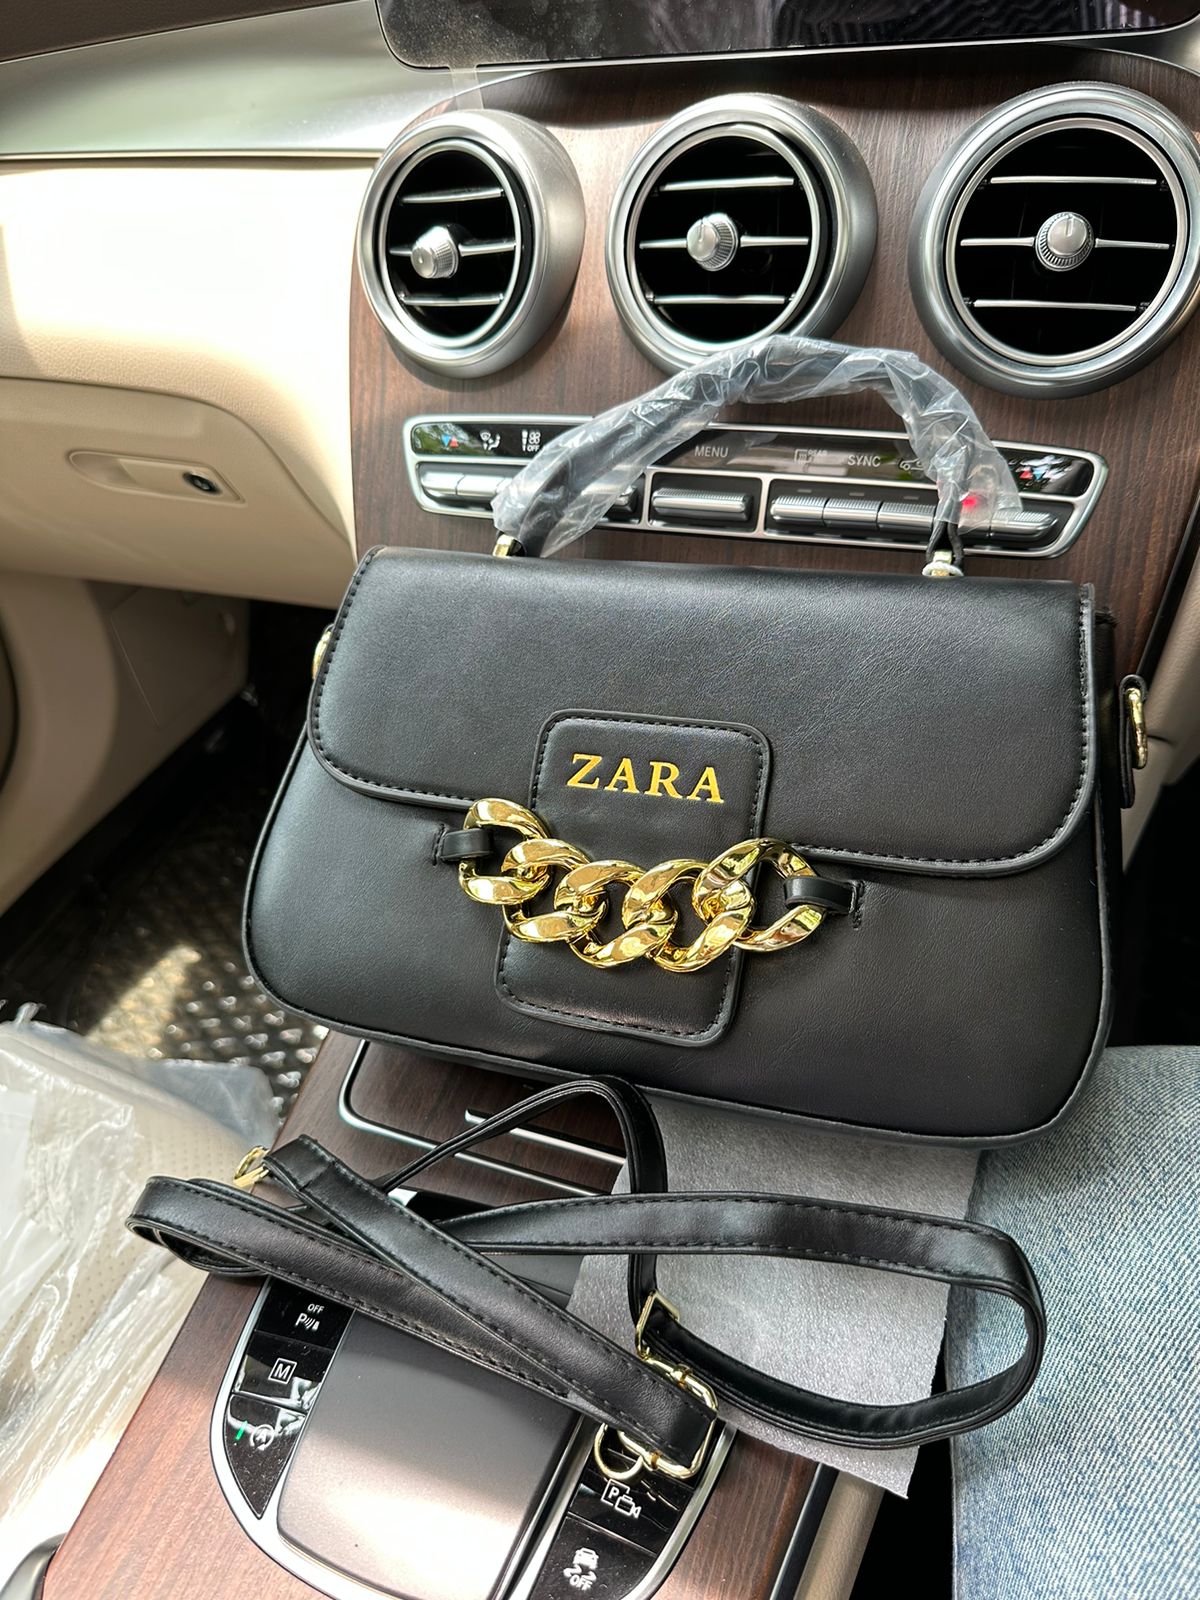 Are Zara handbags good? - Quora